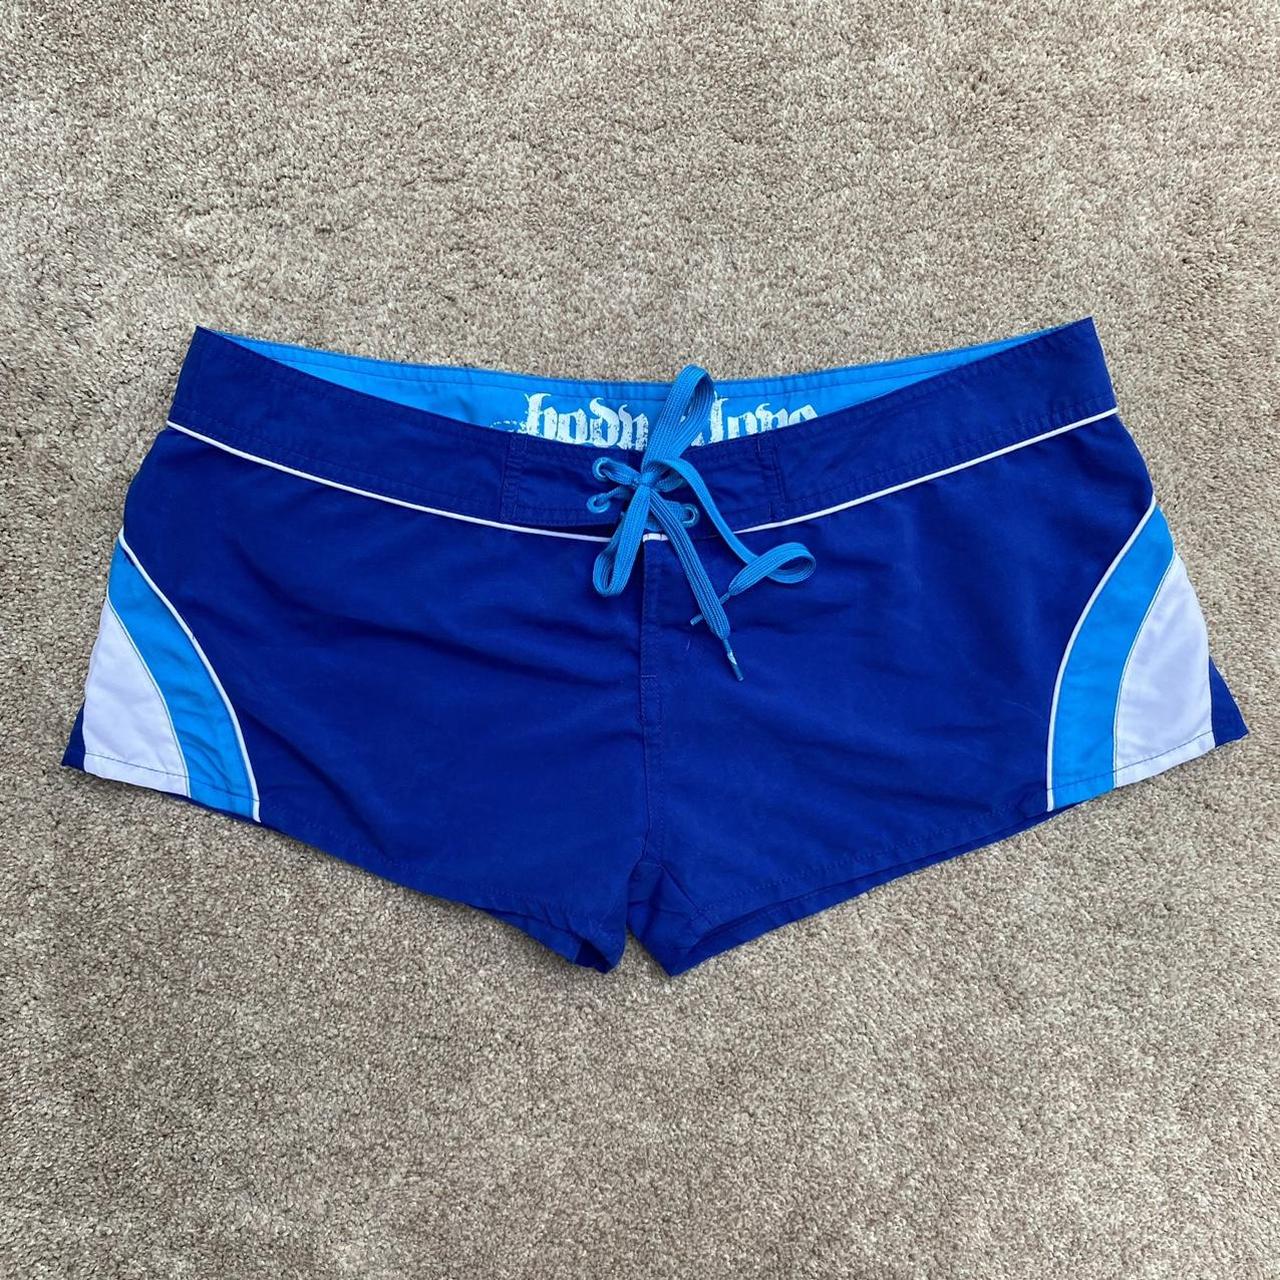 Body Glove Women's Blue and White Swim-briefs-shorts